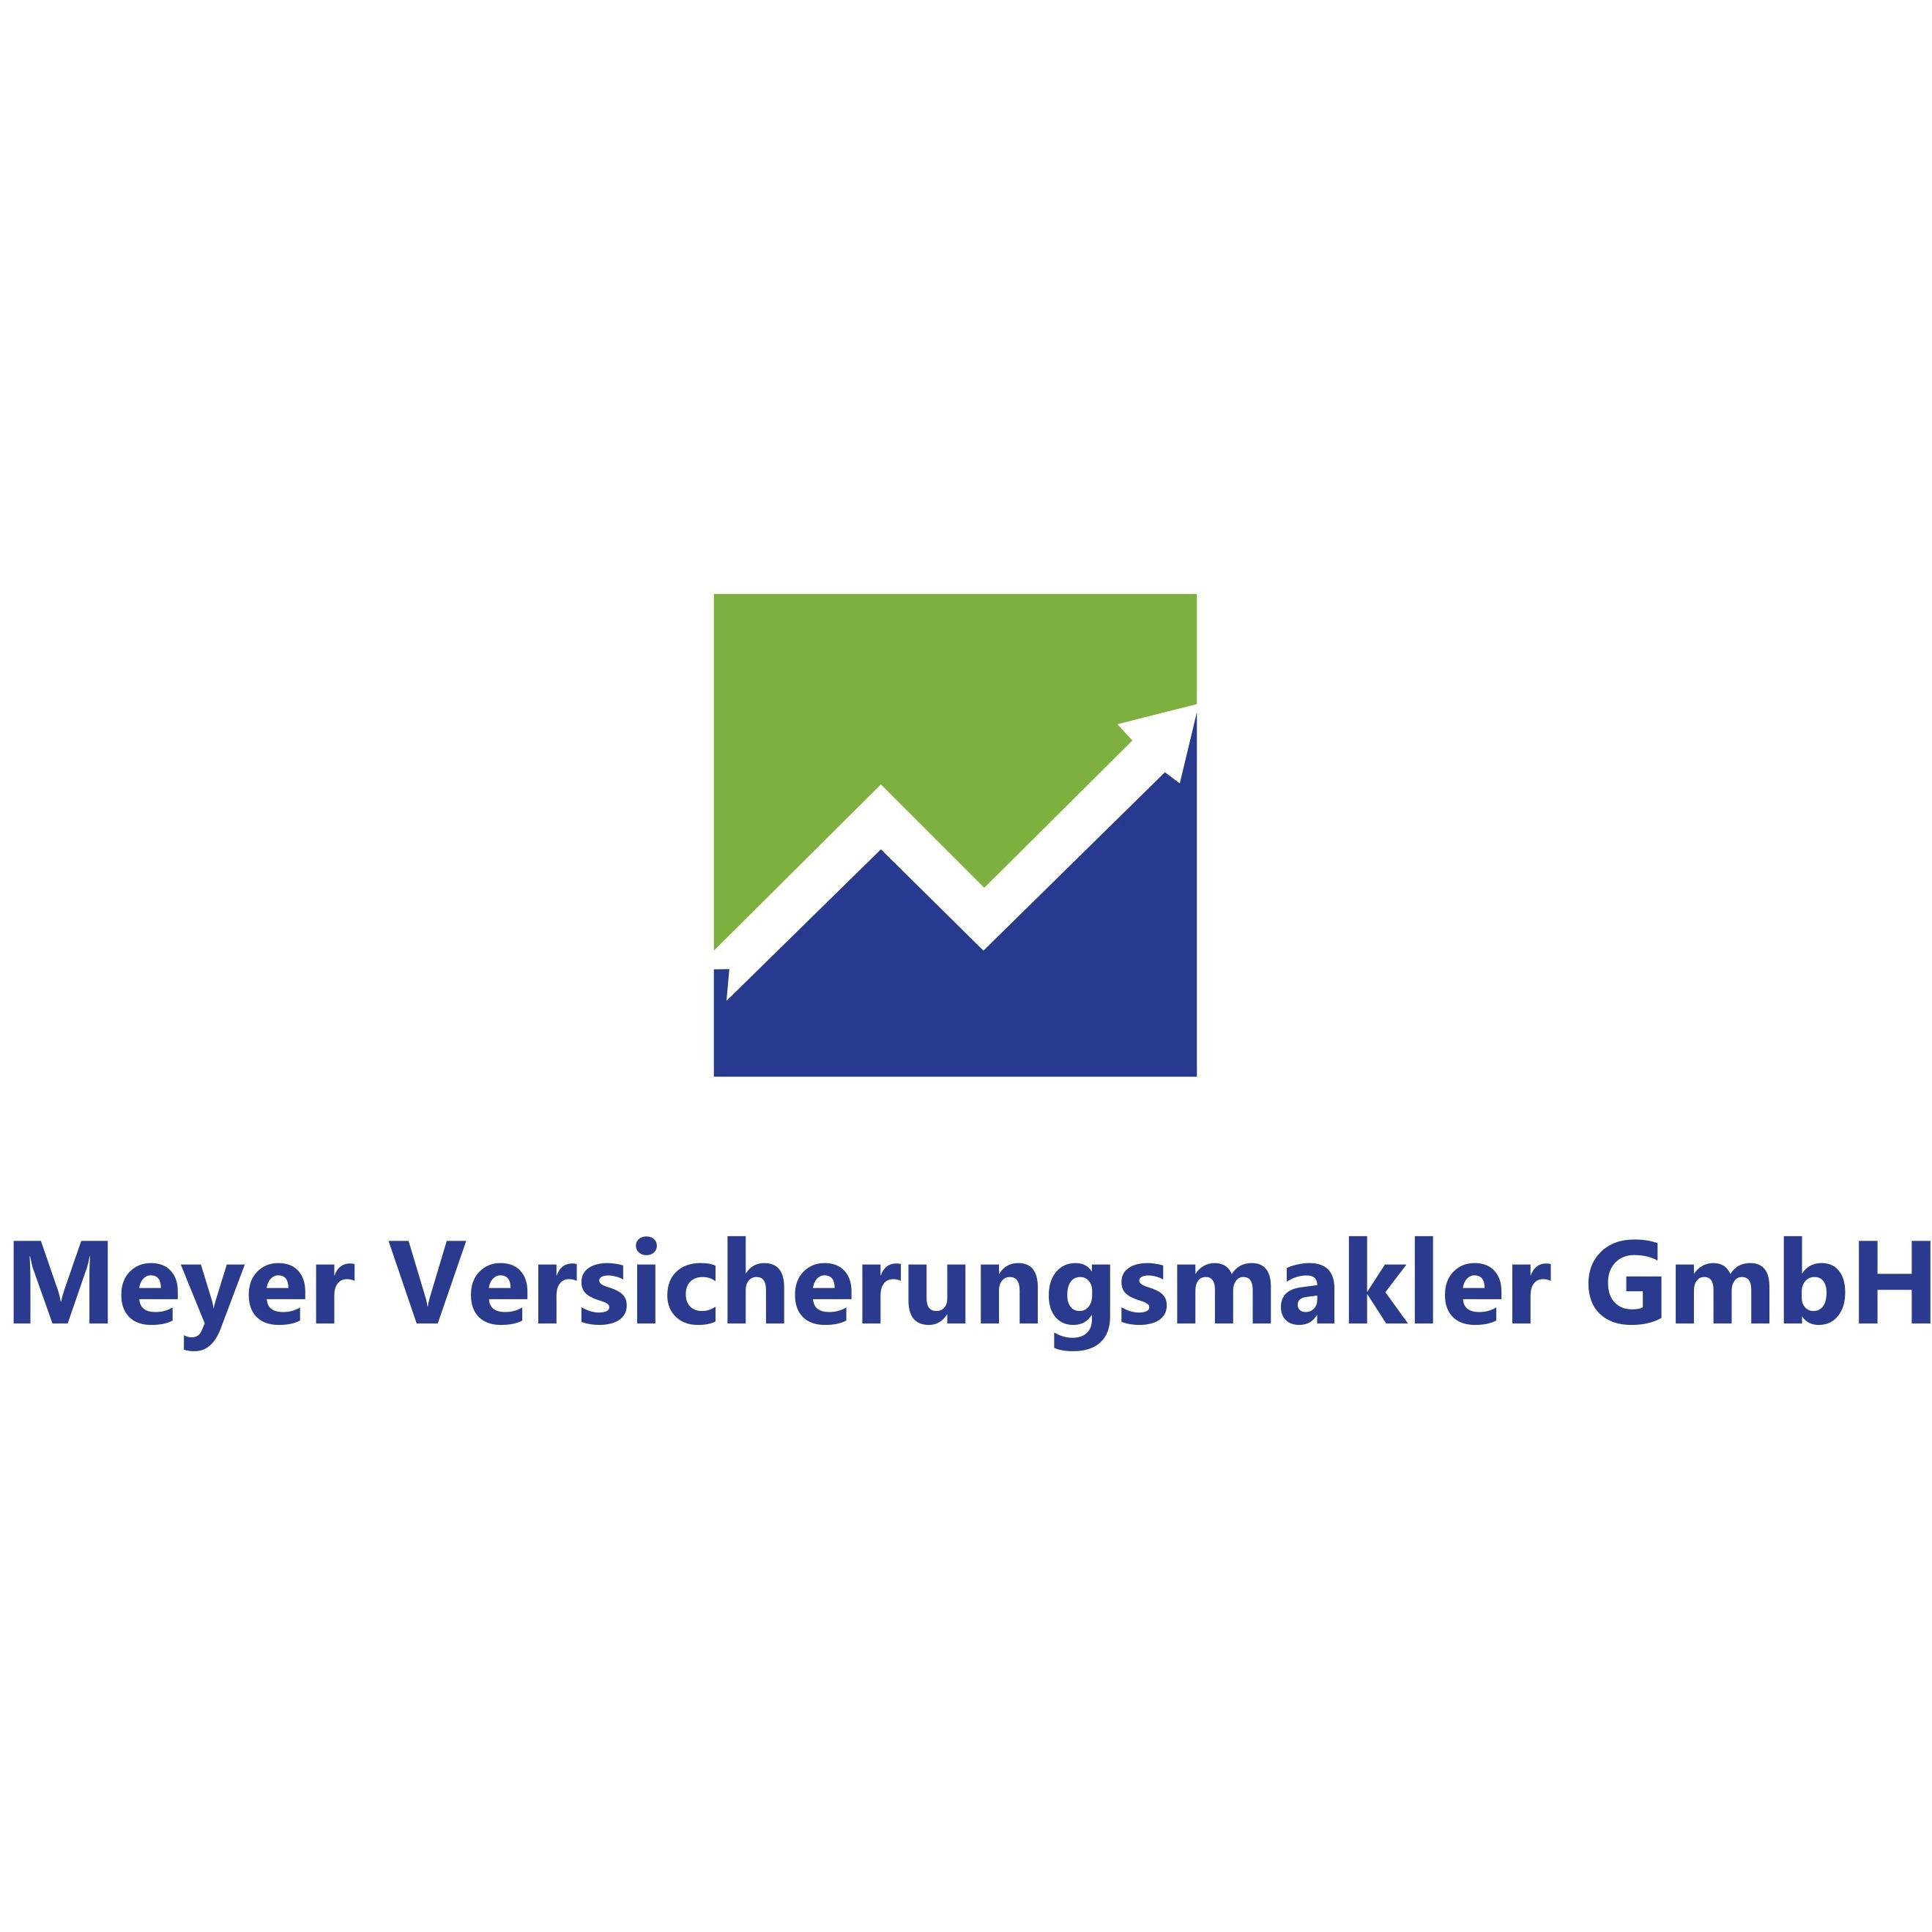 Meyer Versicherungsmakler GmbH in Osnabrück - Logo